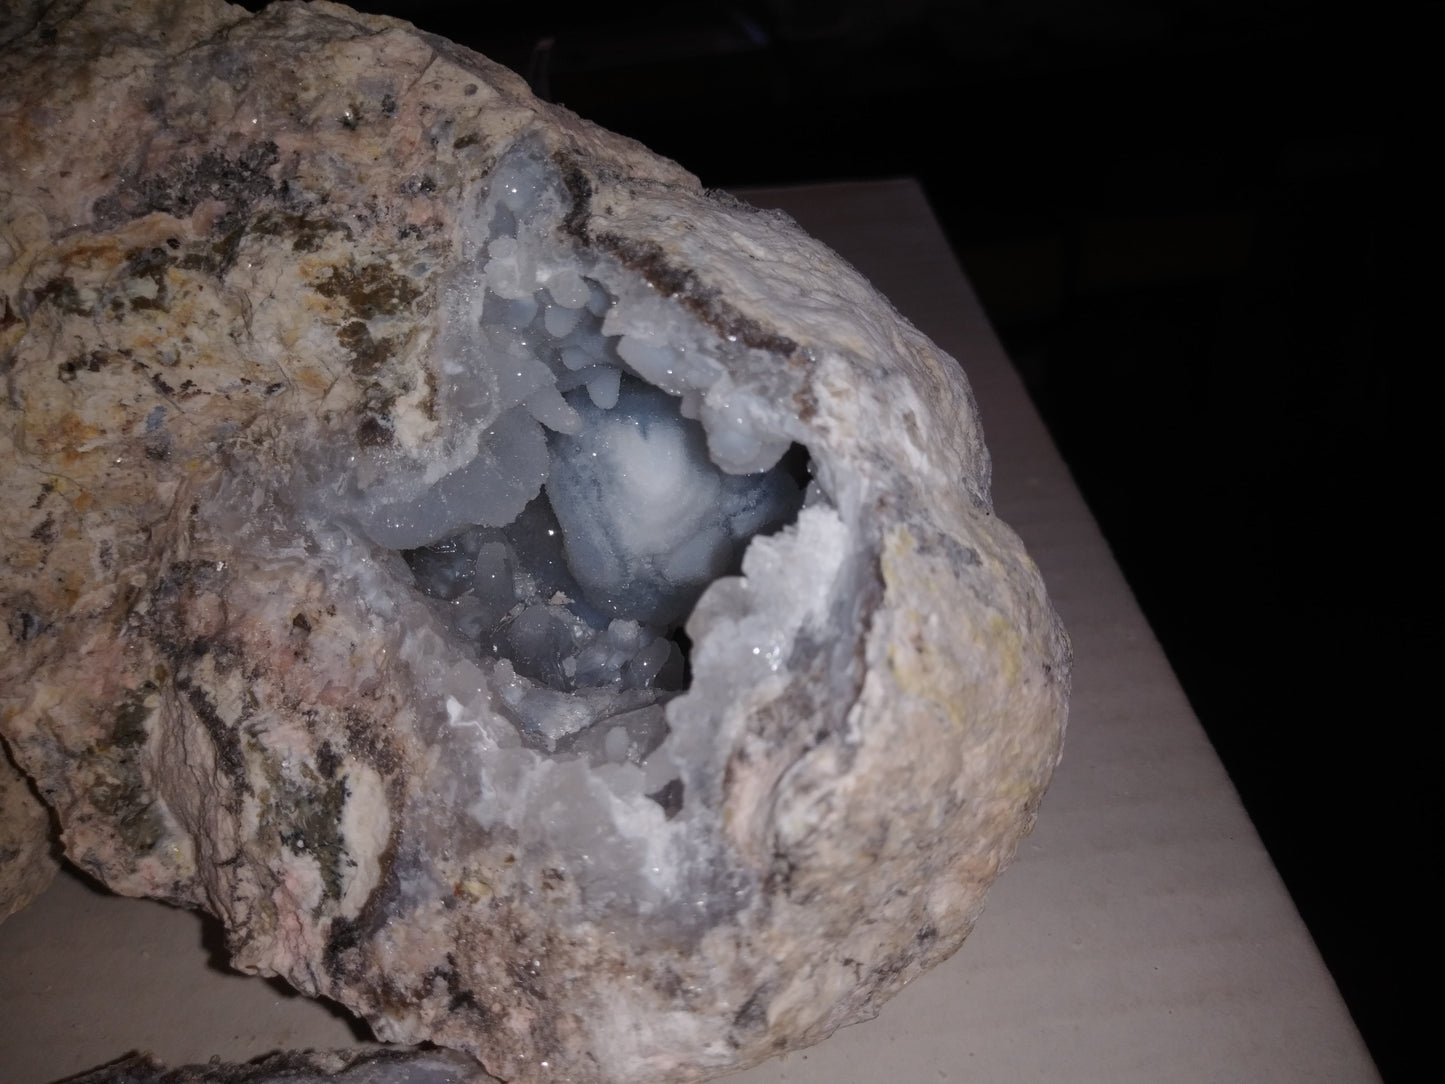 Las Trancas Geodes SmallISH (2.5-3 Inches)